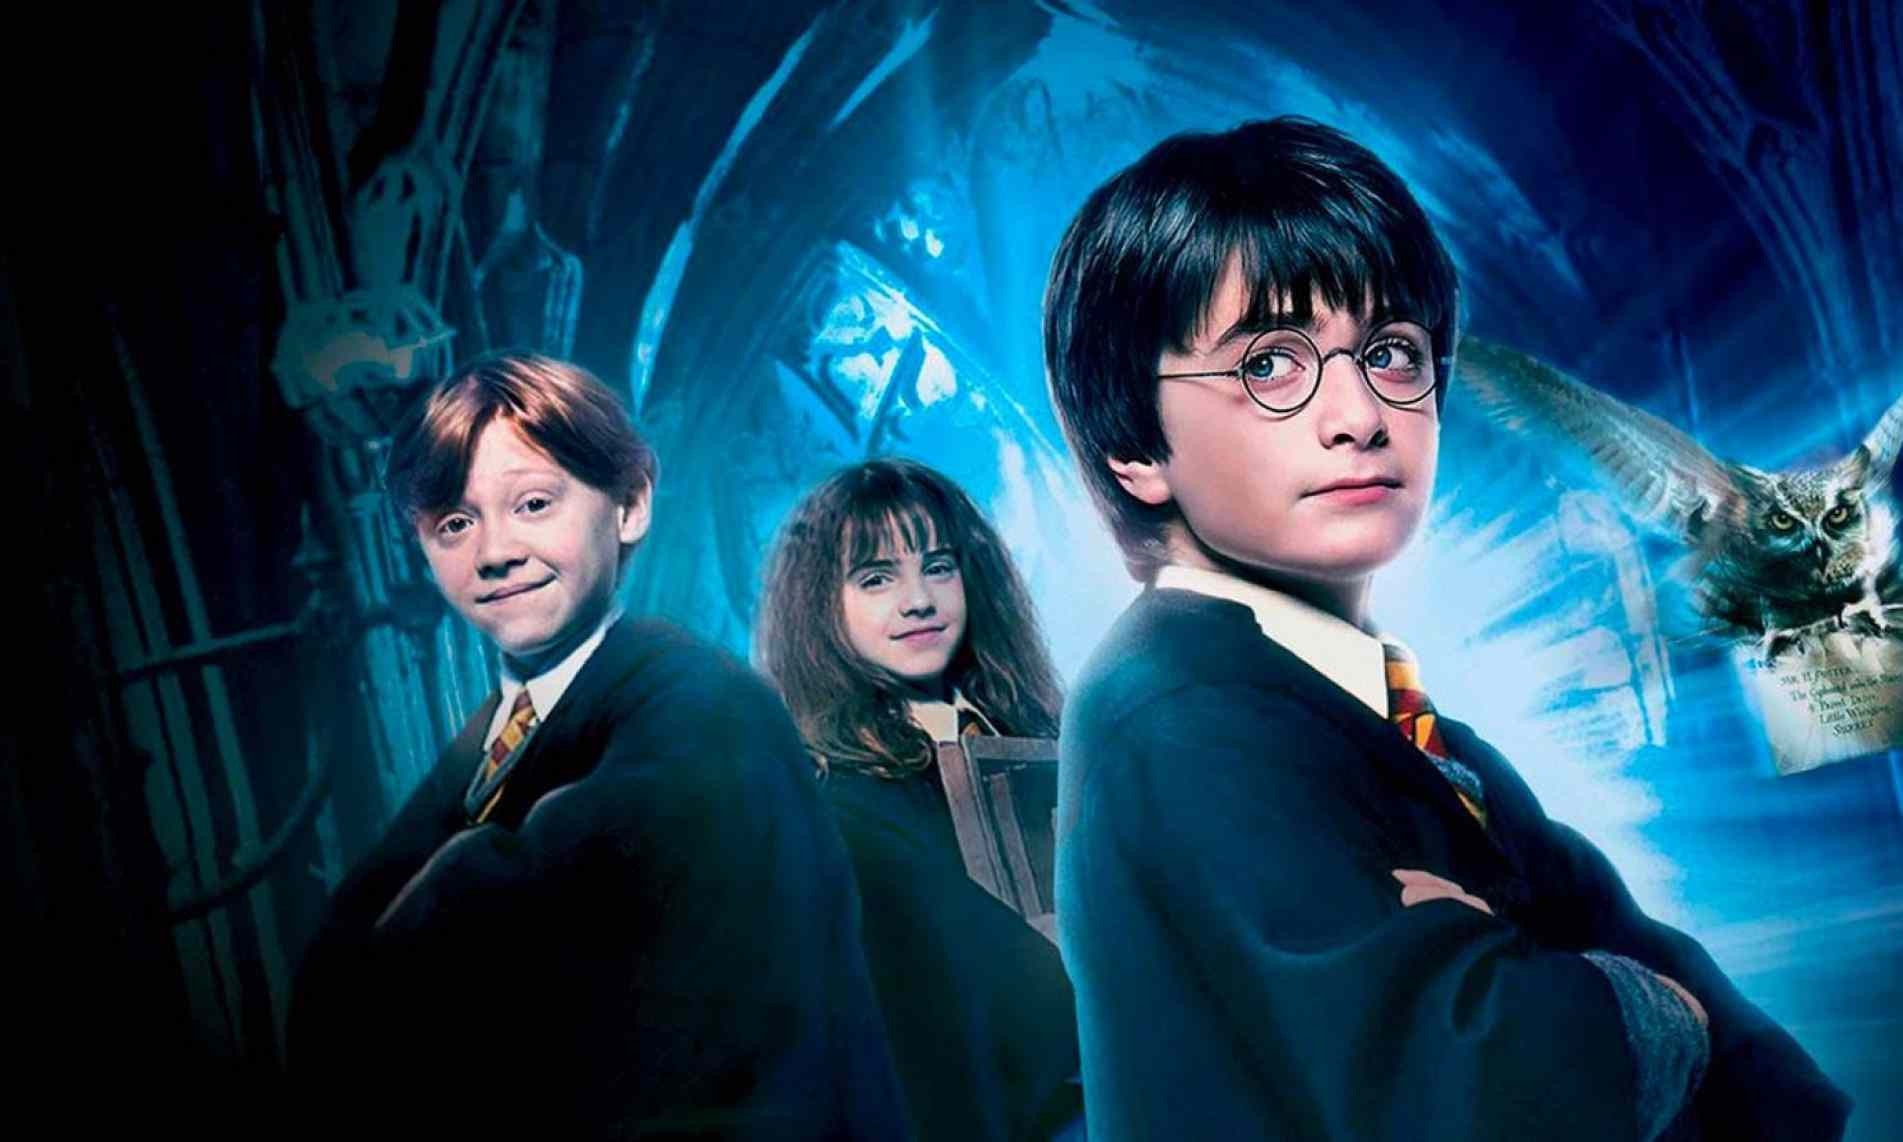 Harry Potter e a Pedra Filosofal voltou às salas para marcar a data.